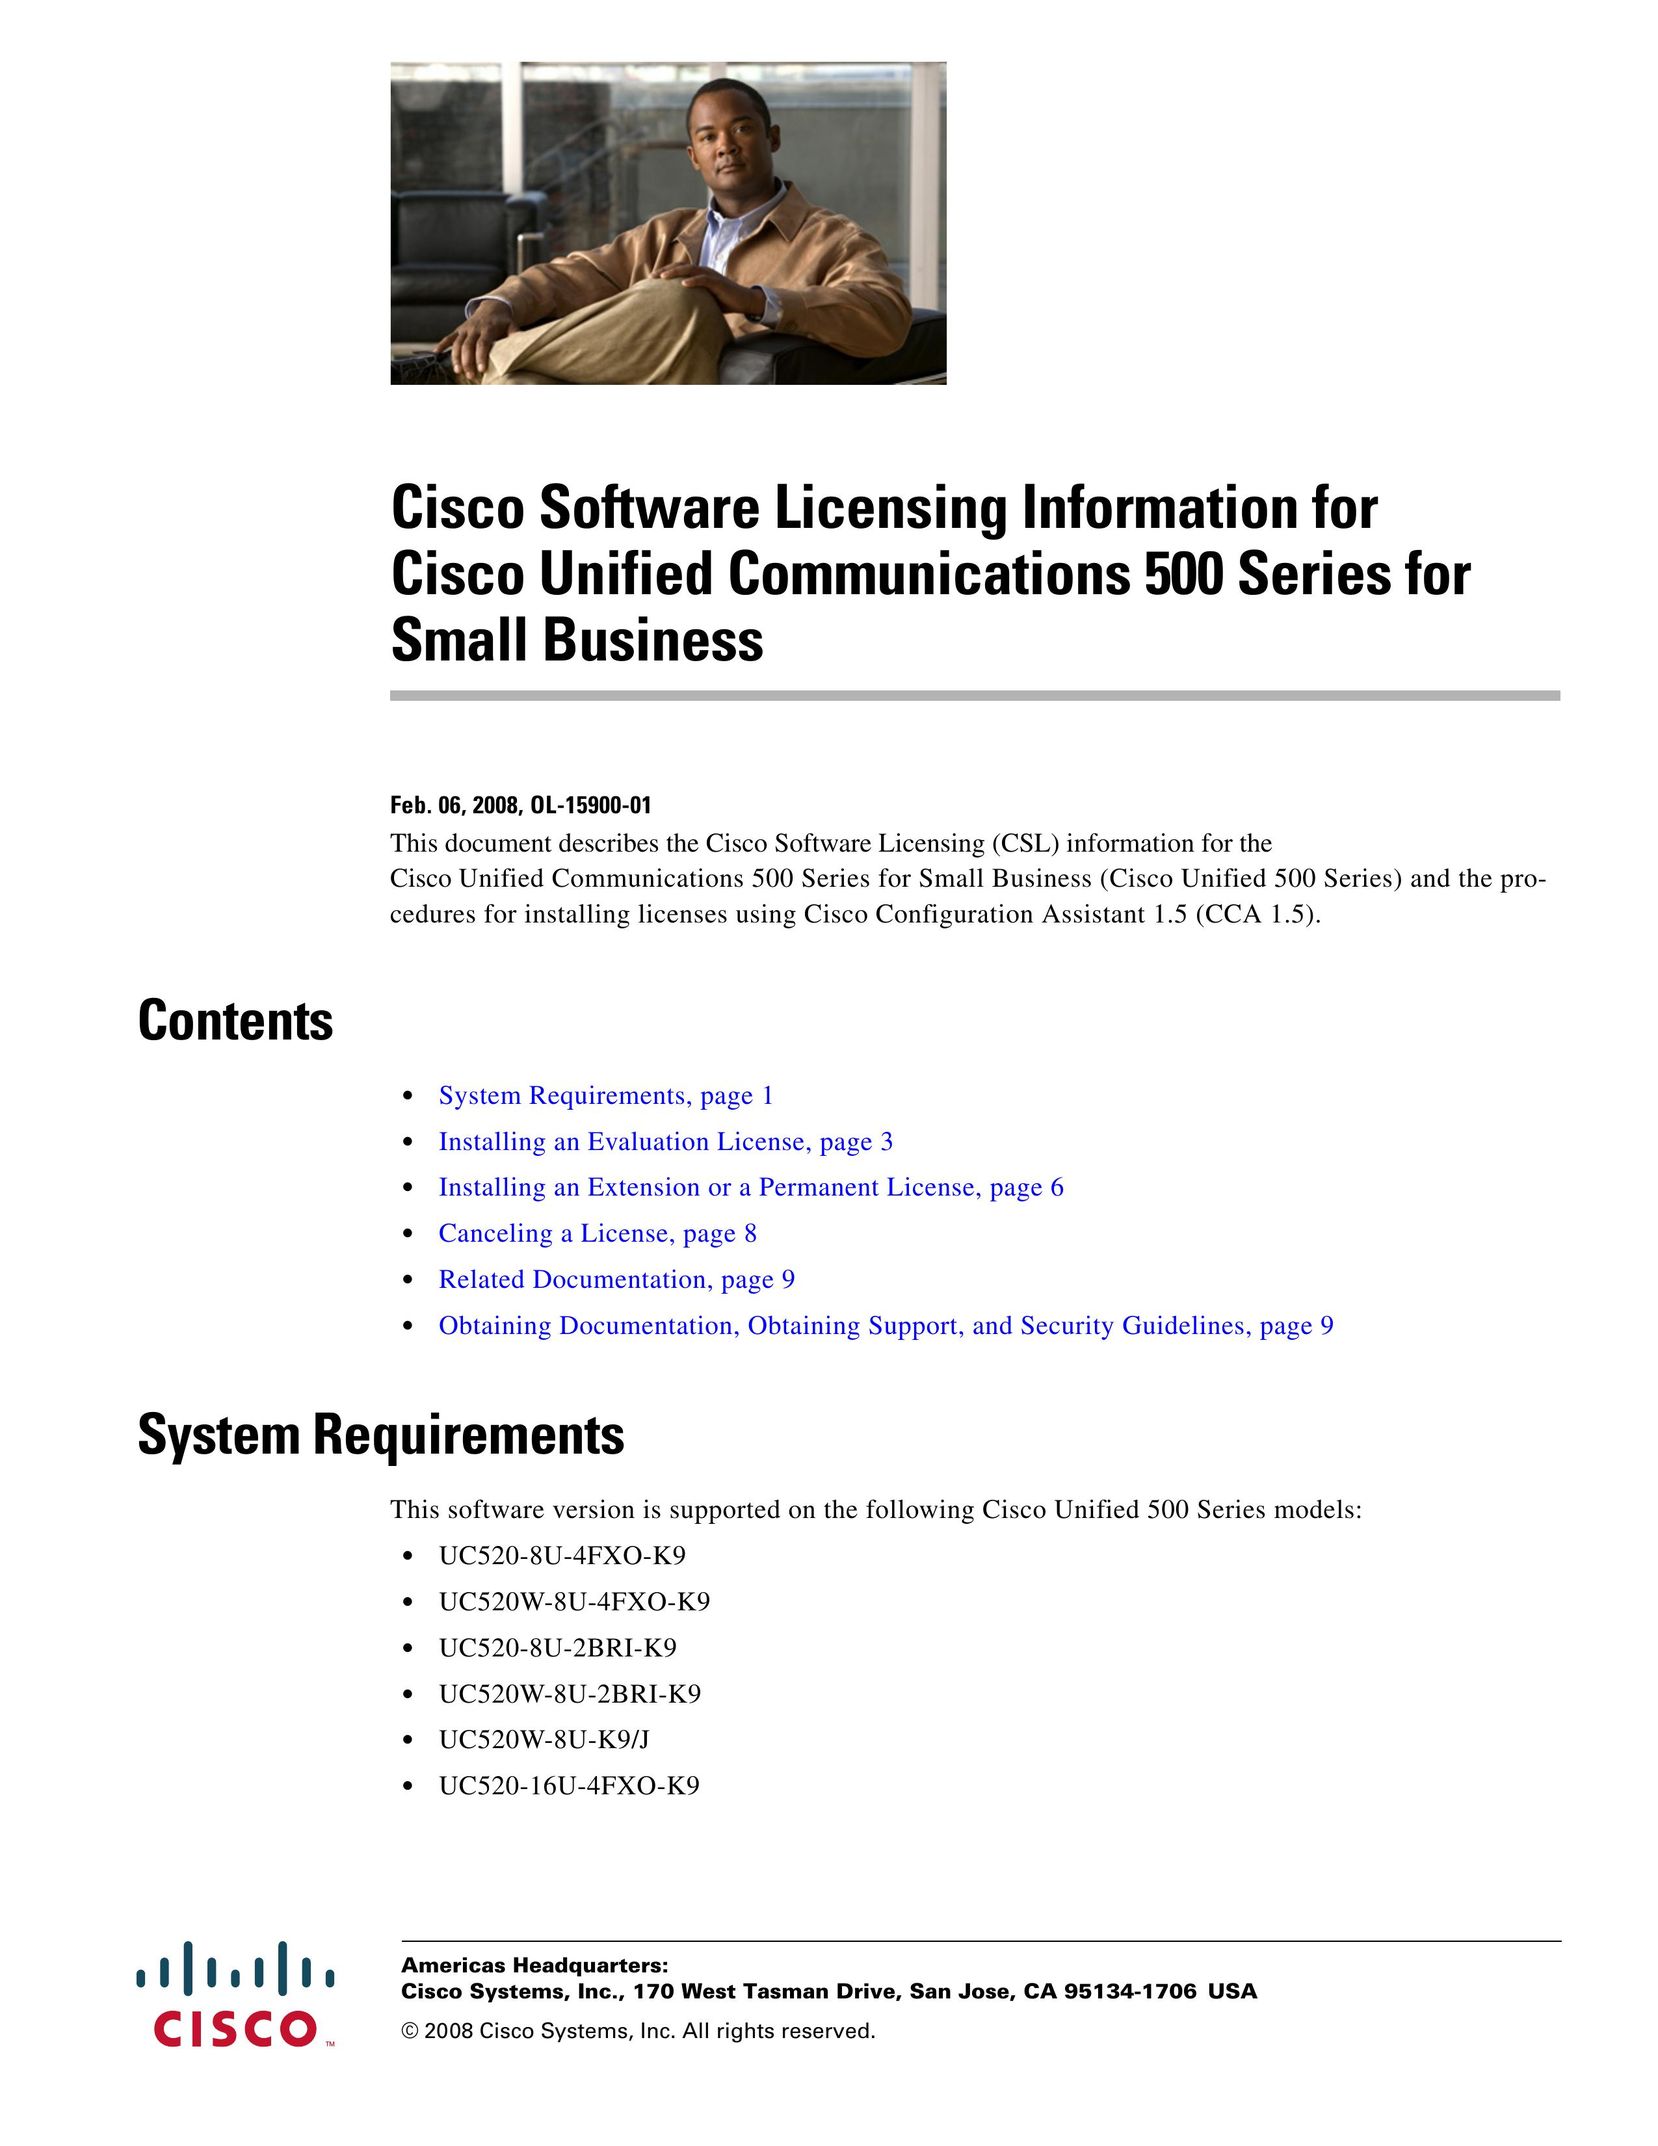 Cisco Systems UC520W8U4FXOK9 Computer Hardware User Manual